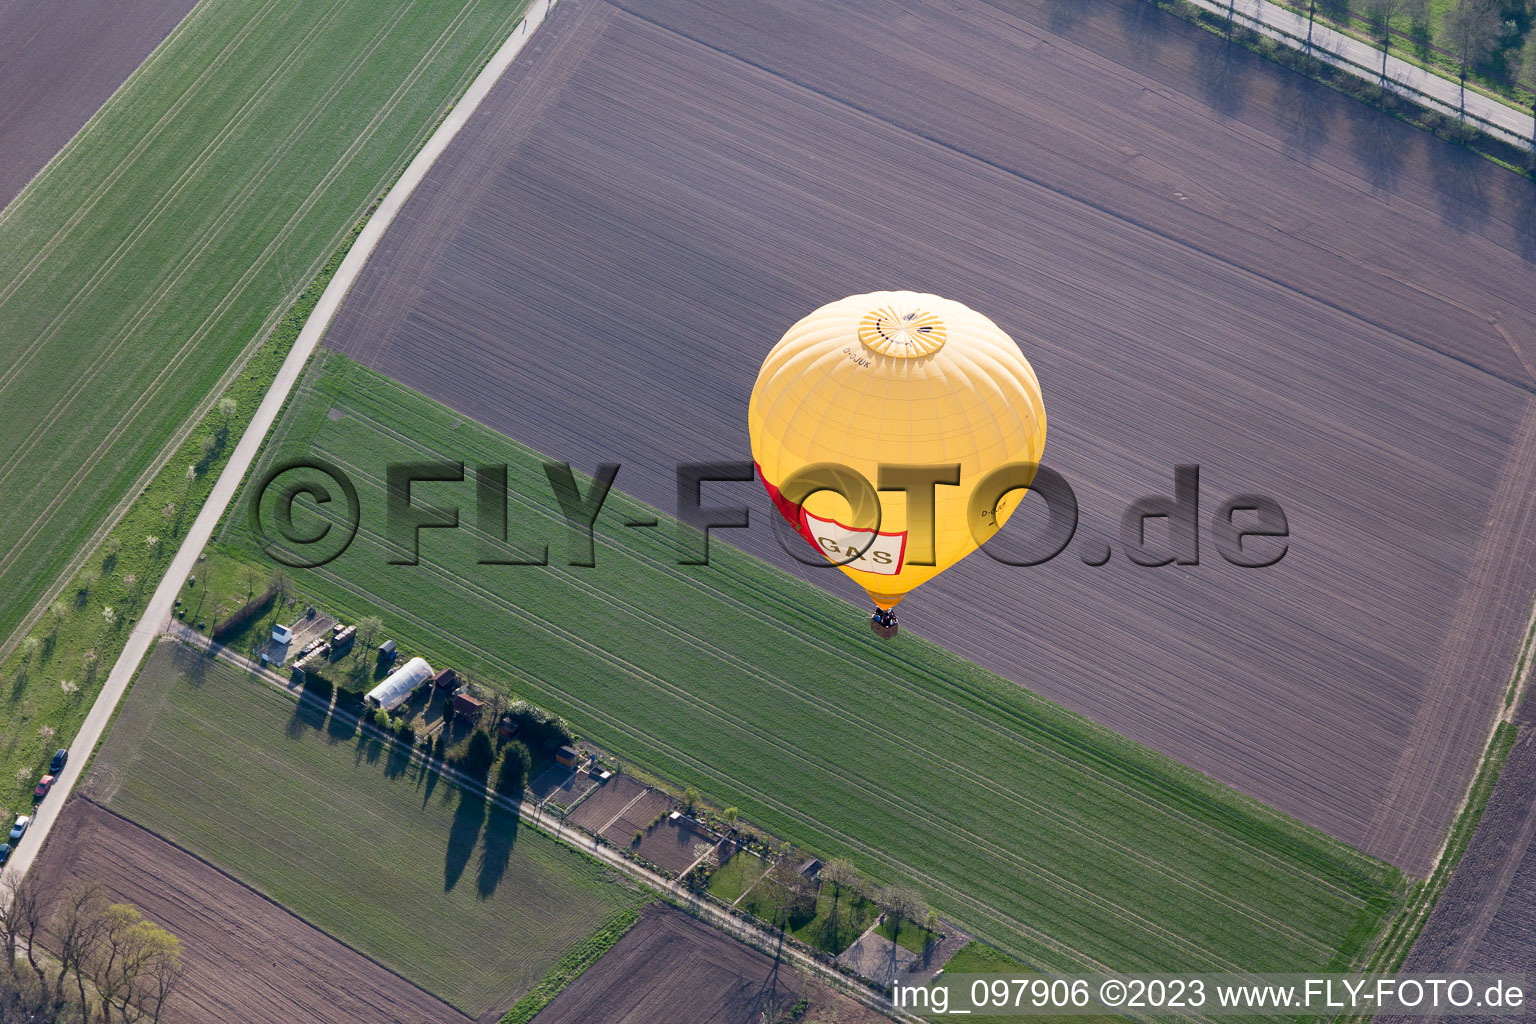 Balloon launch in the district Hayna in Herxheim bei Landau/Pfalz in the state Rhineland-Palatinate, Germany